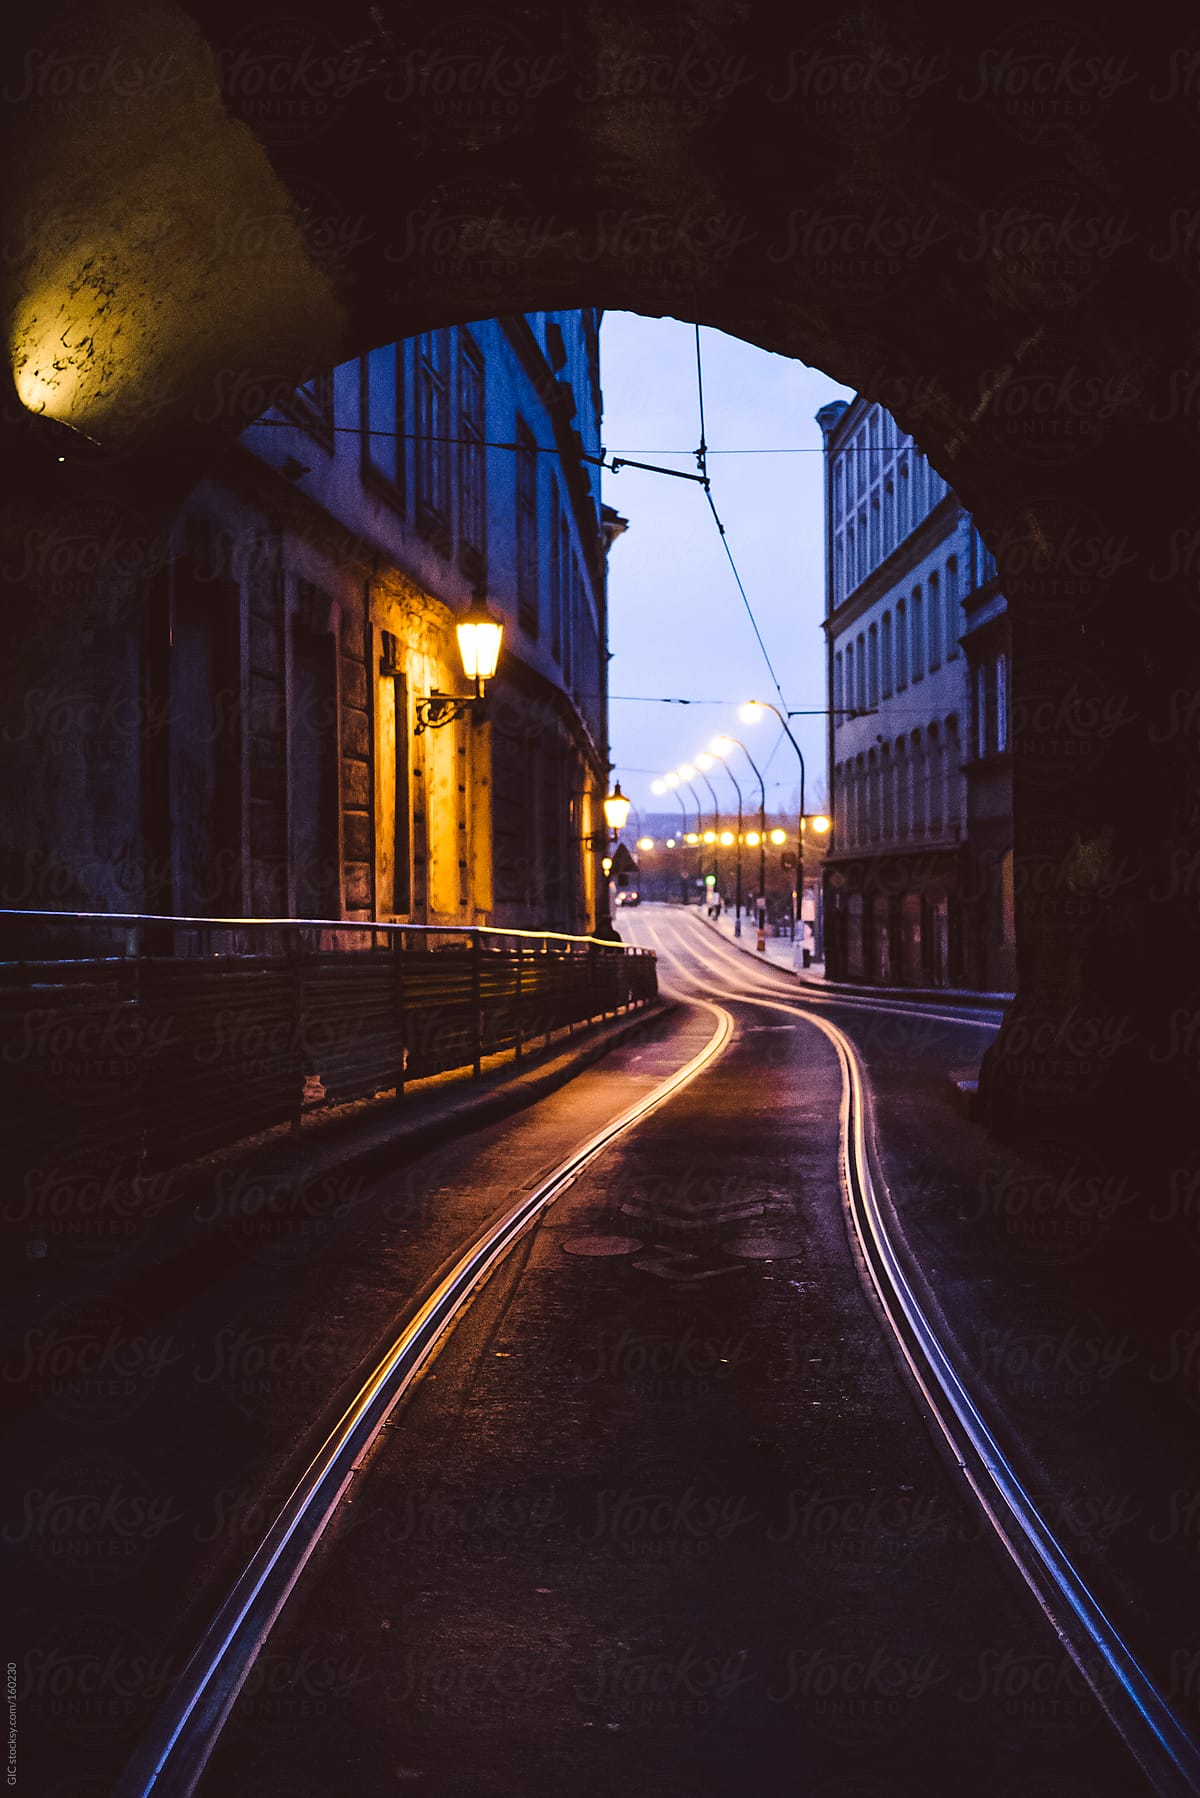 Railway in the street - Prague